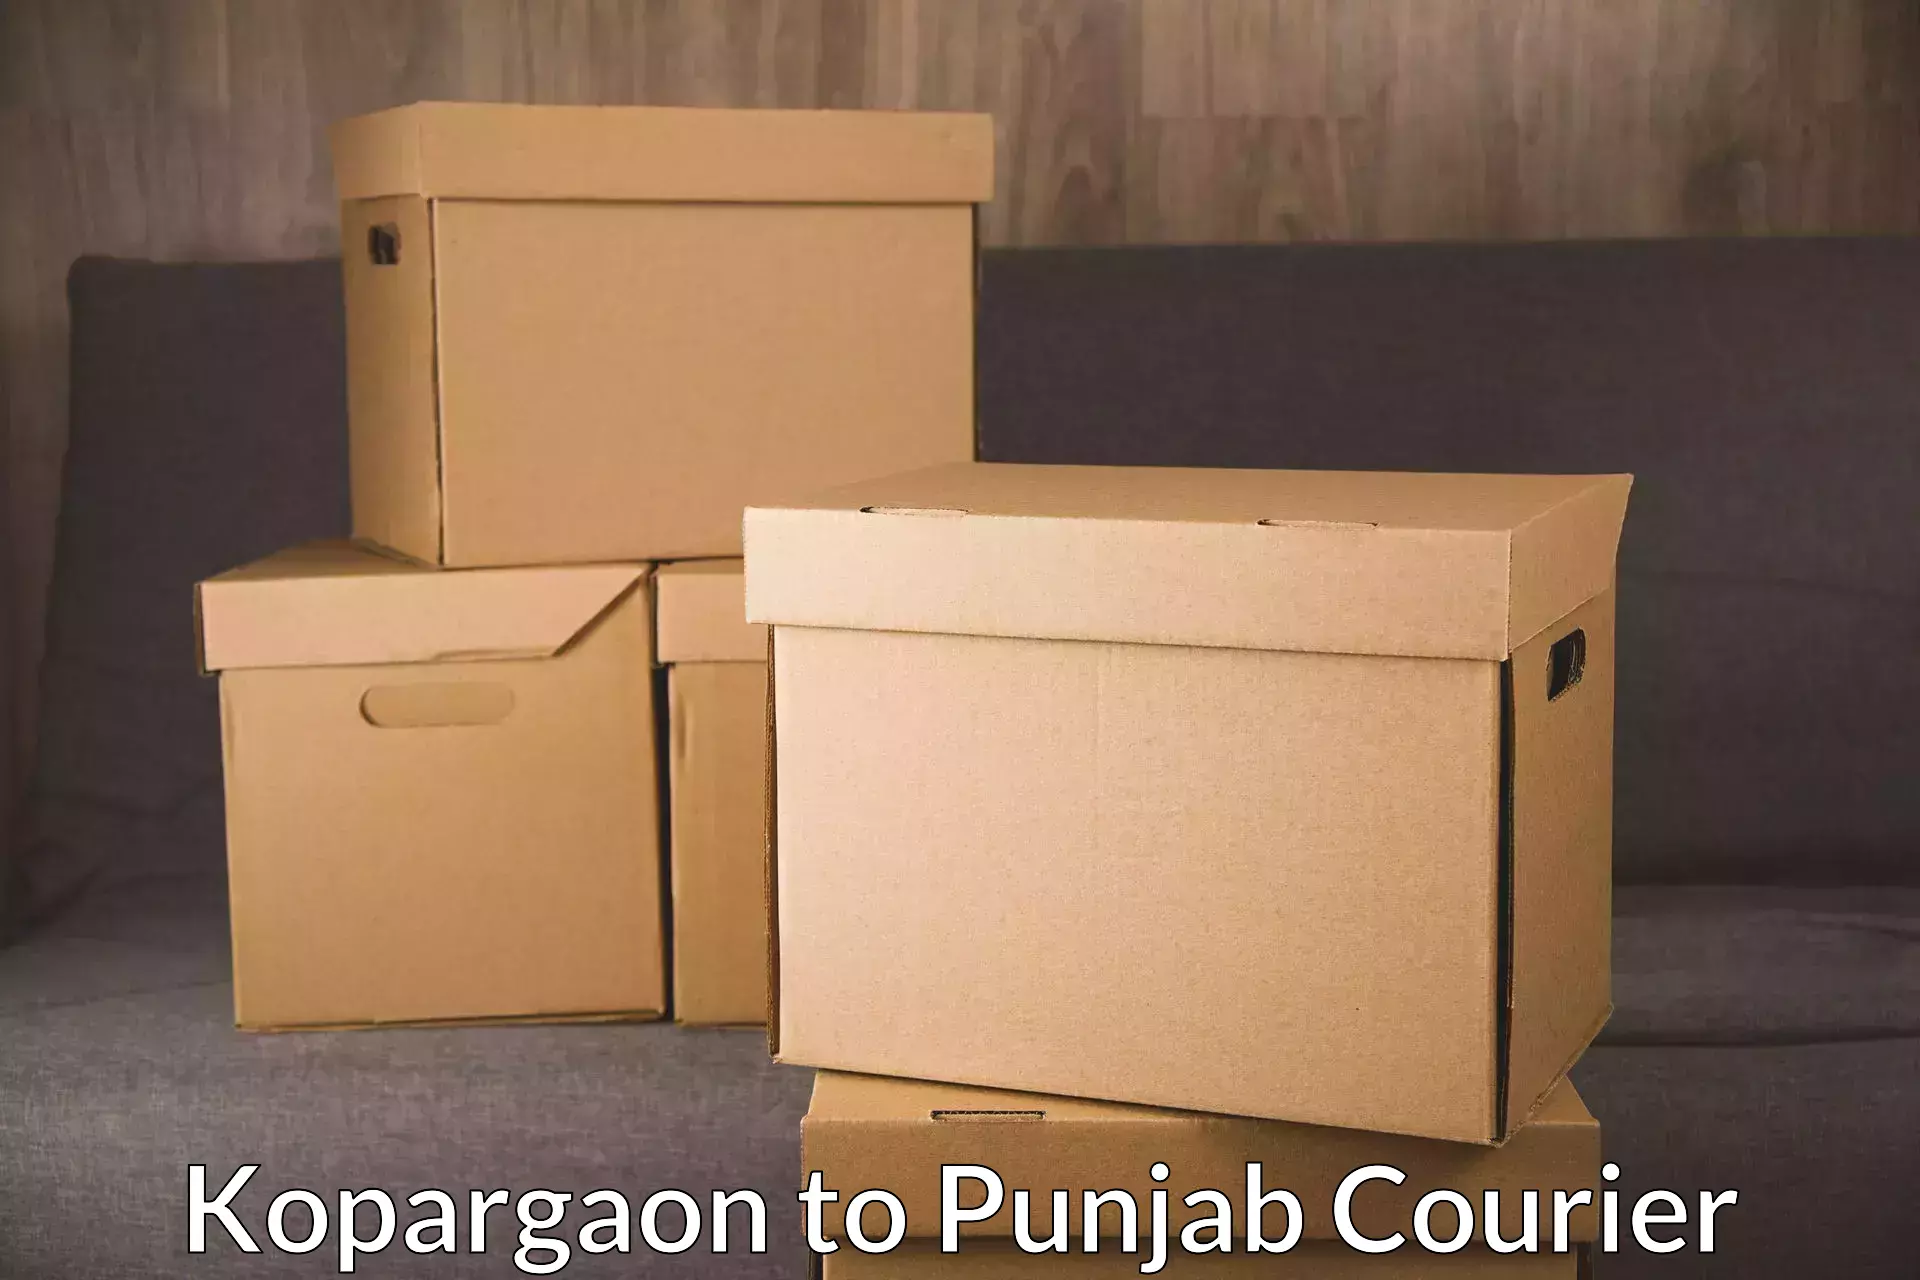 Round-the-clock parcel delivery Kopargaon to Central University of Punjab Bathinda